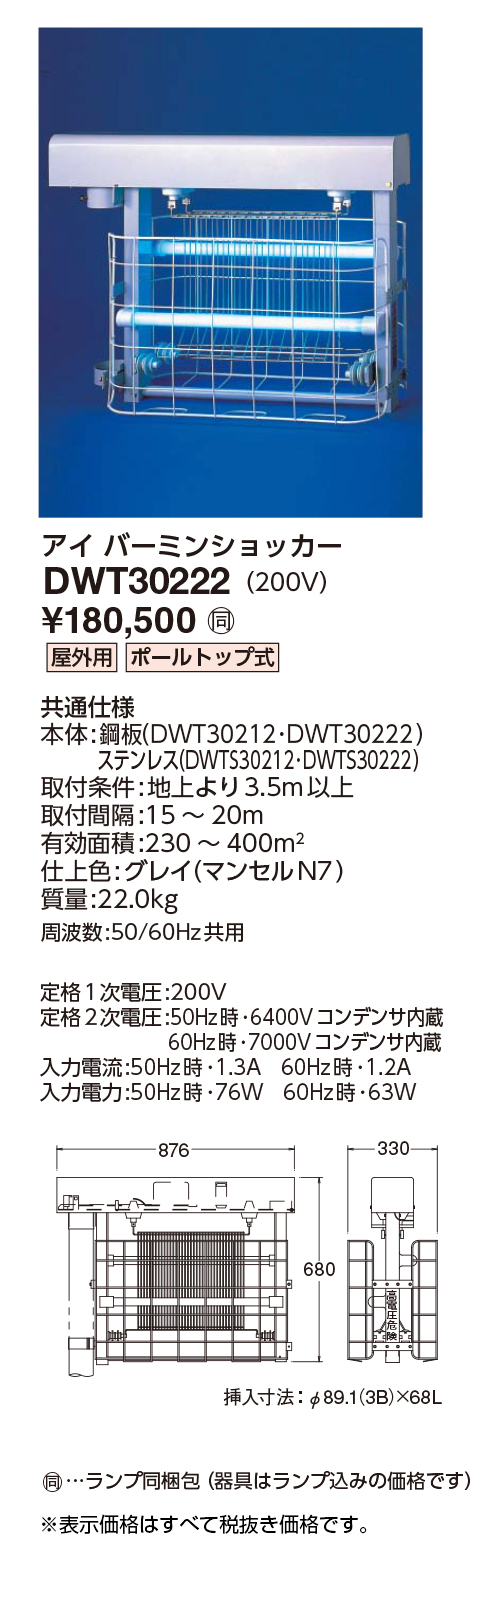 DWT30222